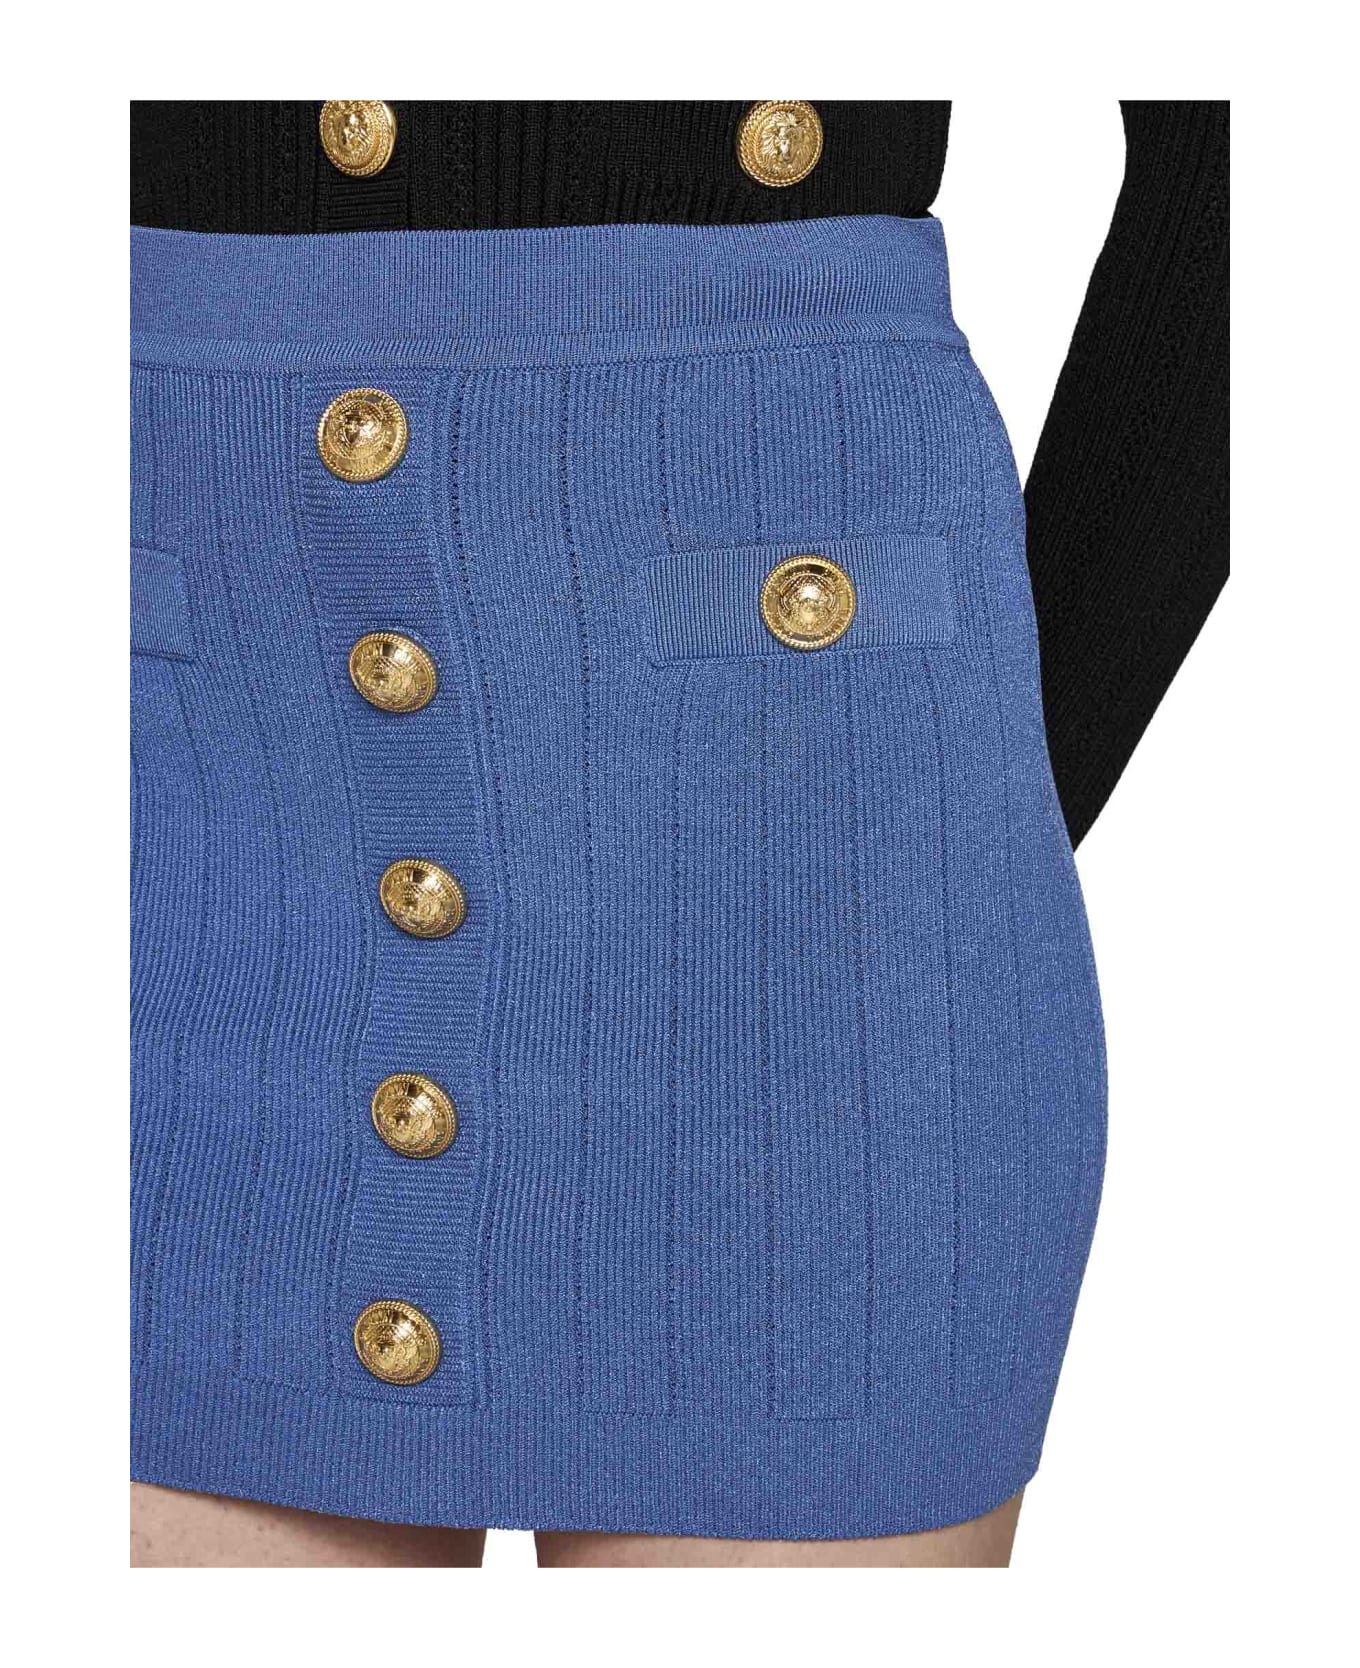 Balmain Logo Button Knit Skirt - Blu